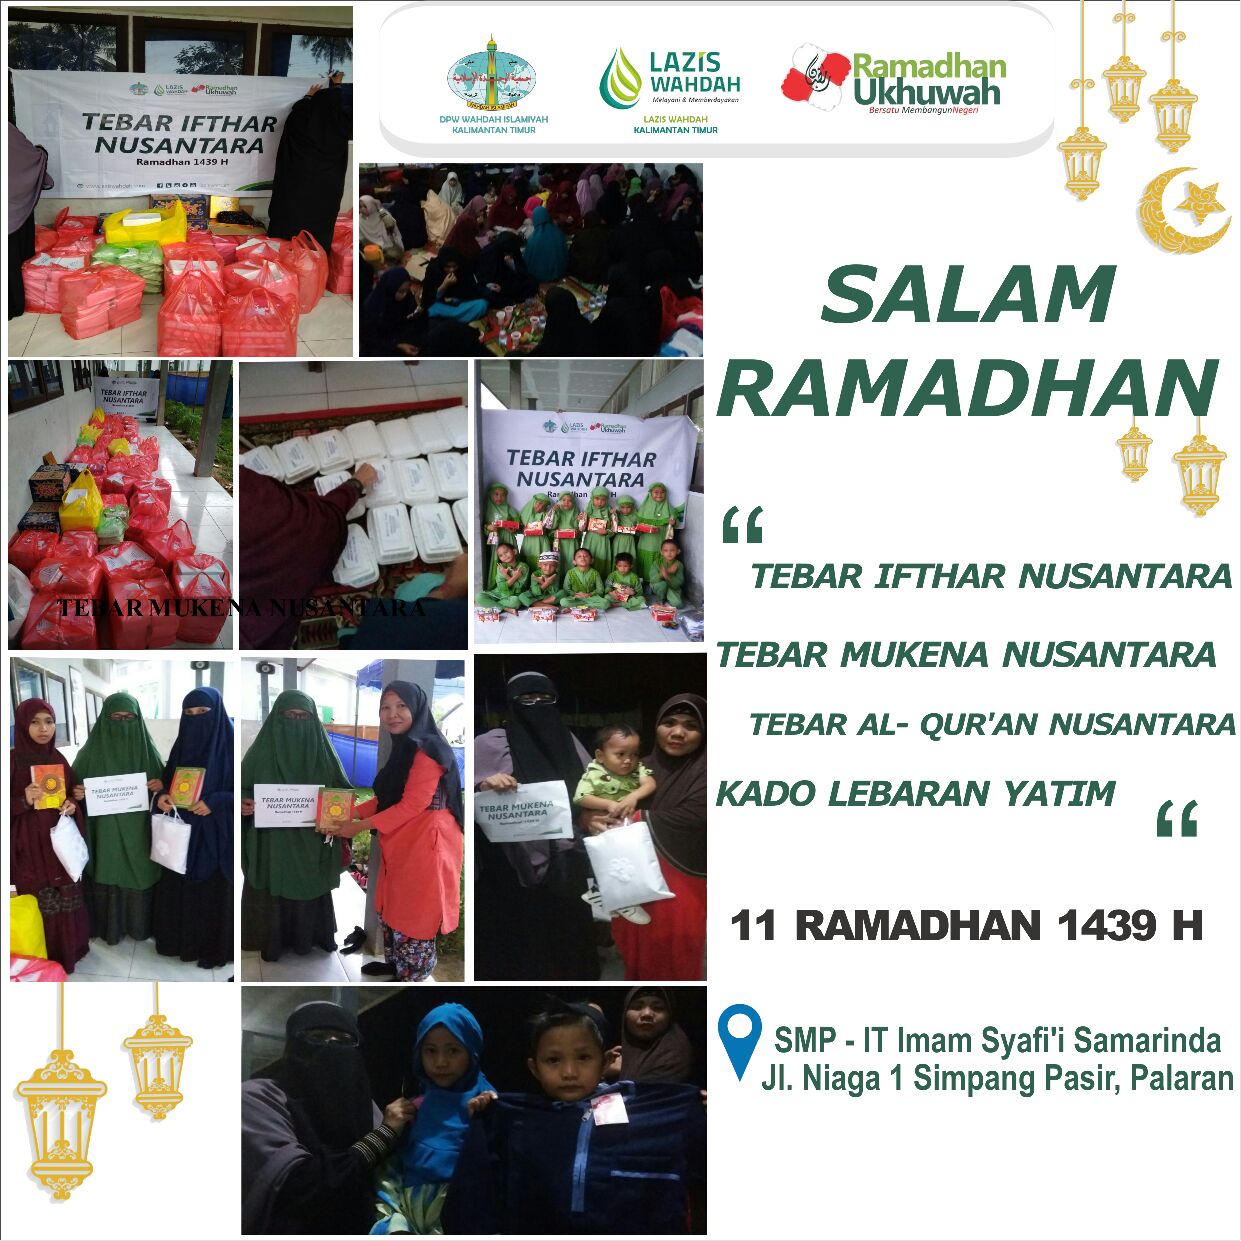 Ramadhan Ukhuwah besama Muslimah wahdah Samarinda